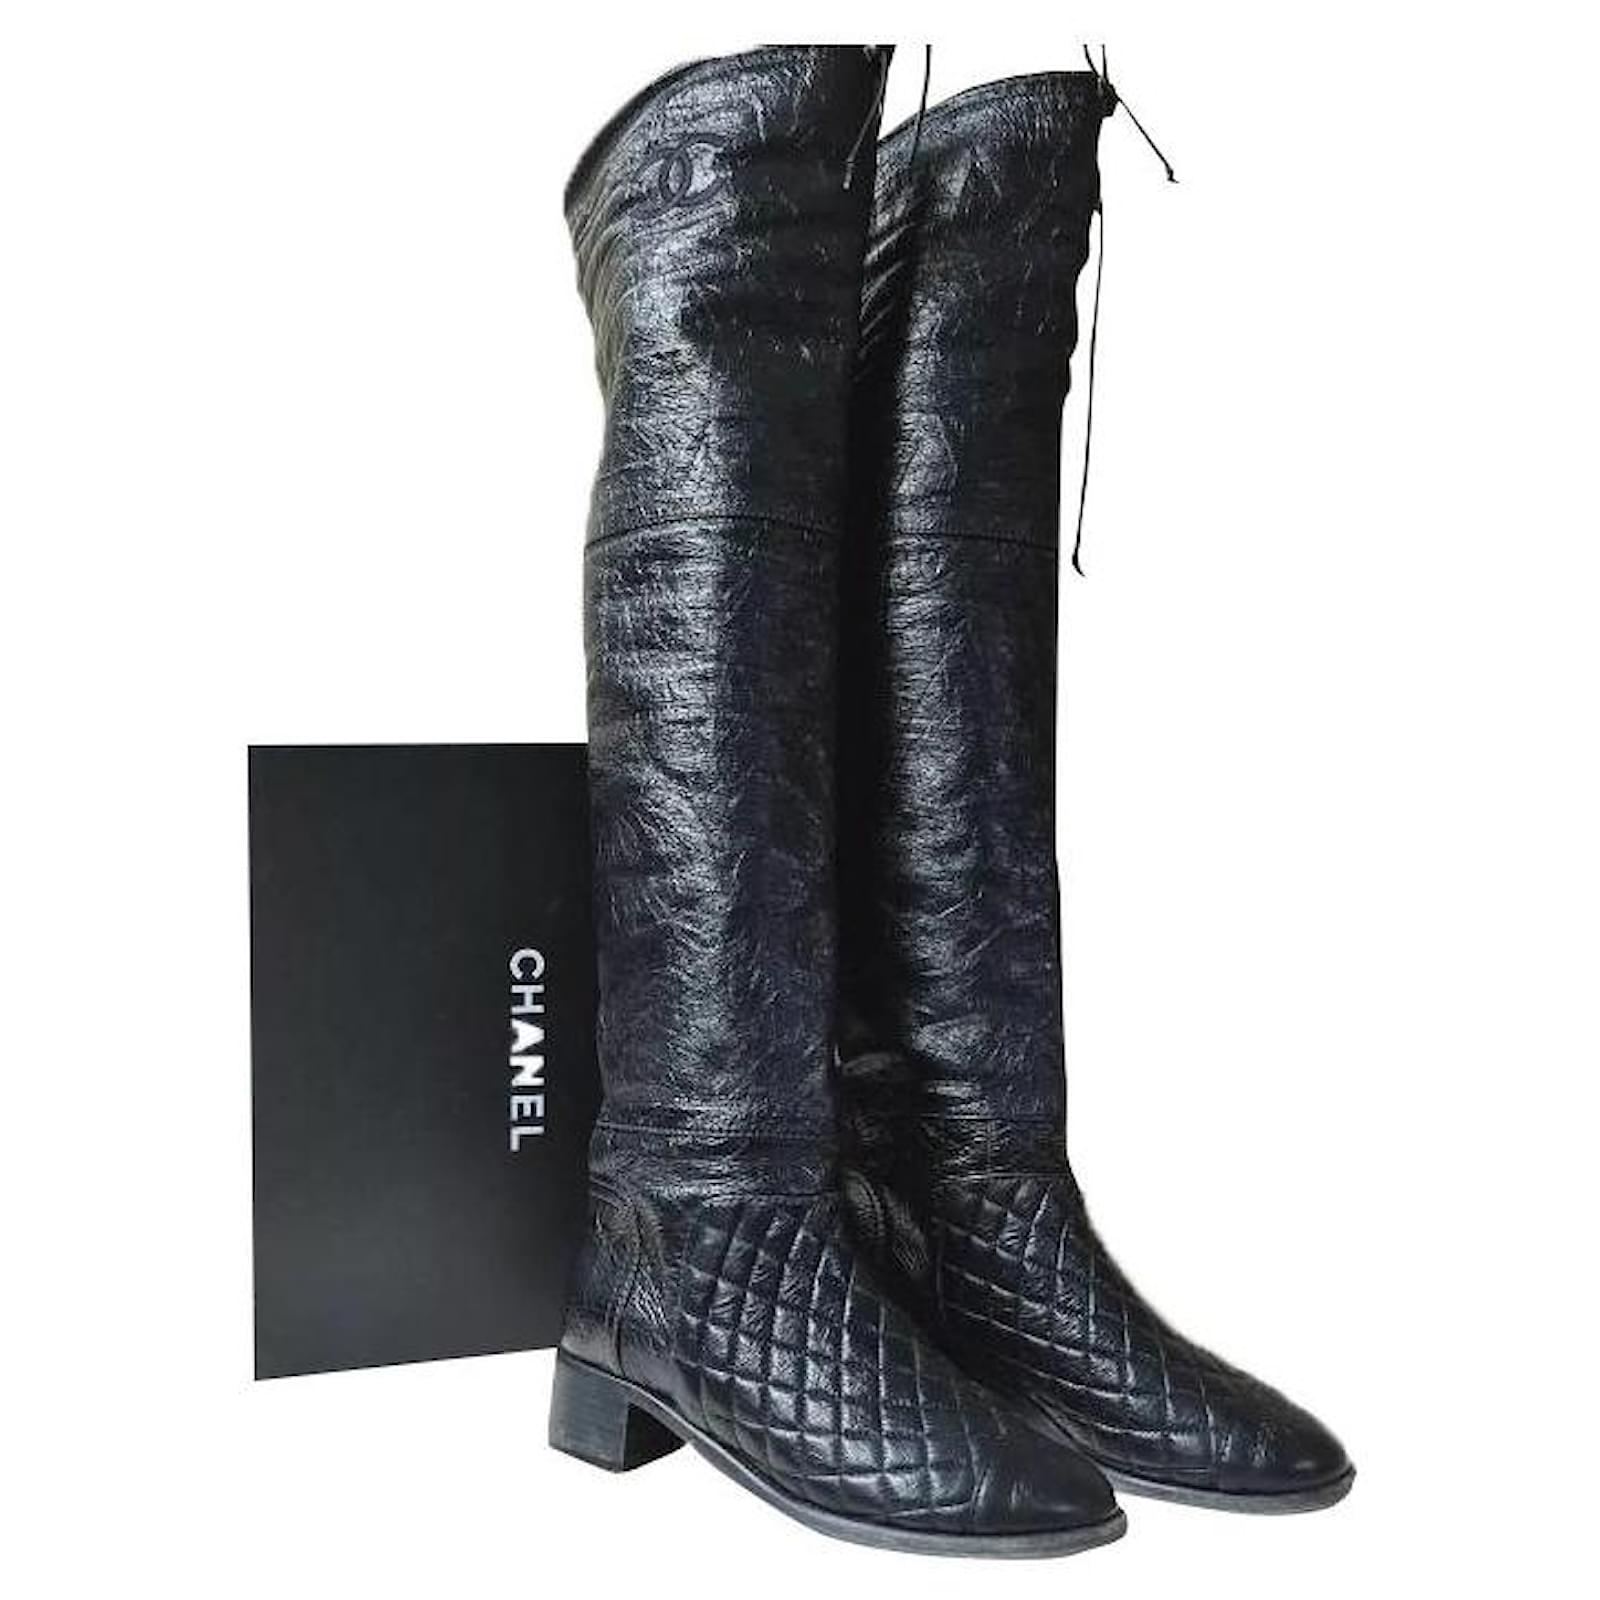 CHANEL 15B Lambskin Leather Tall Over The Knee High Wedge Heel Boots Black  2400  eBay